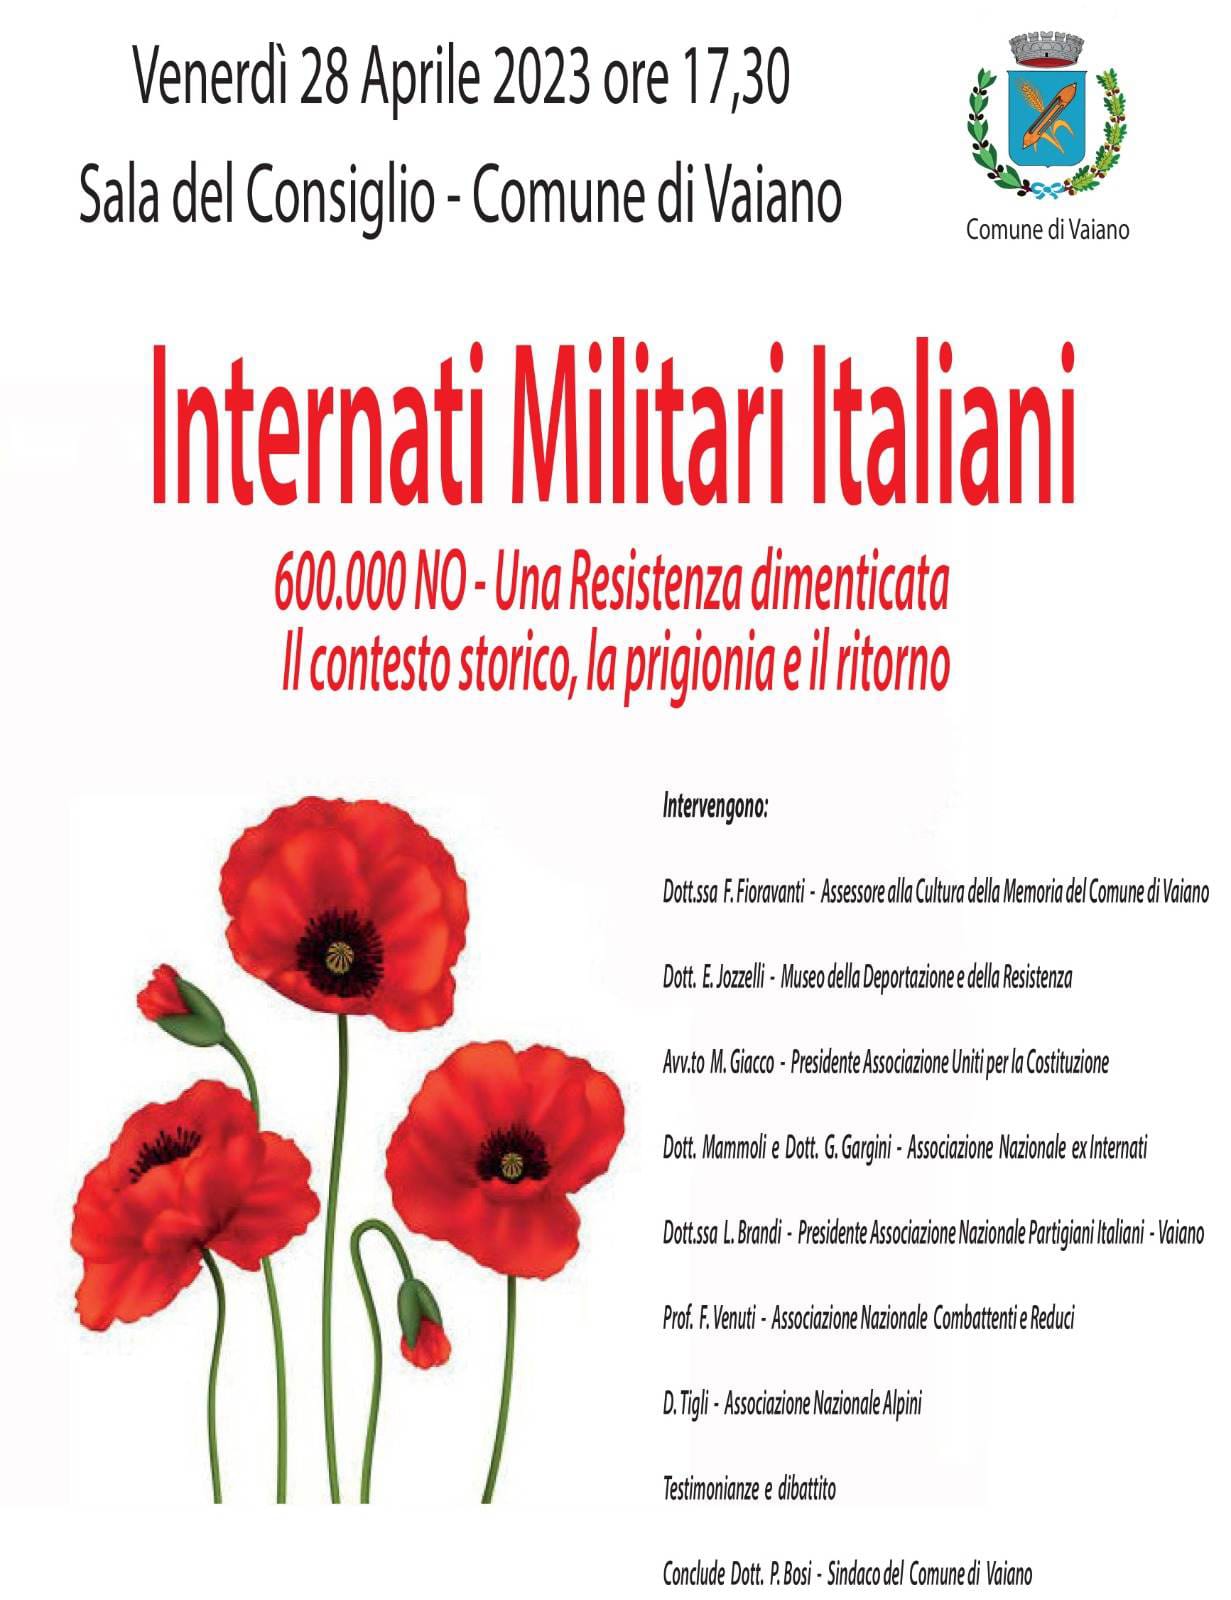 <strong>Vaiano ricorda i 600mila NO degli Internati Militari Italiani</strong>